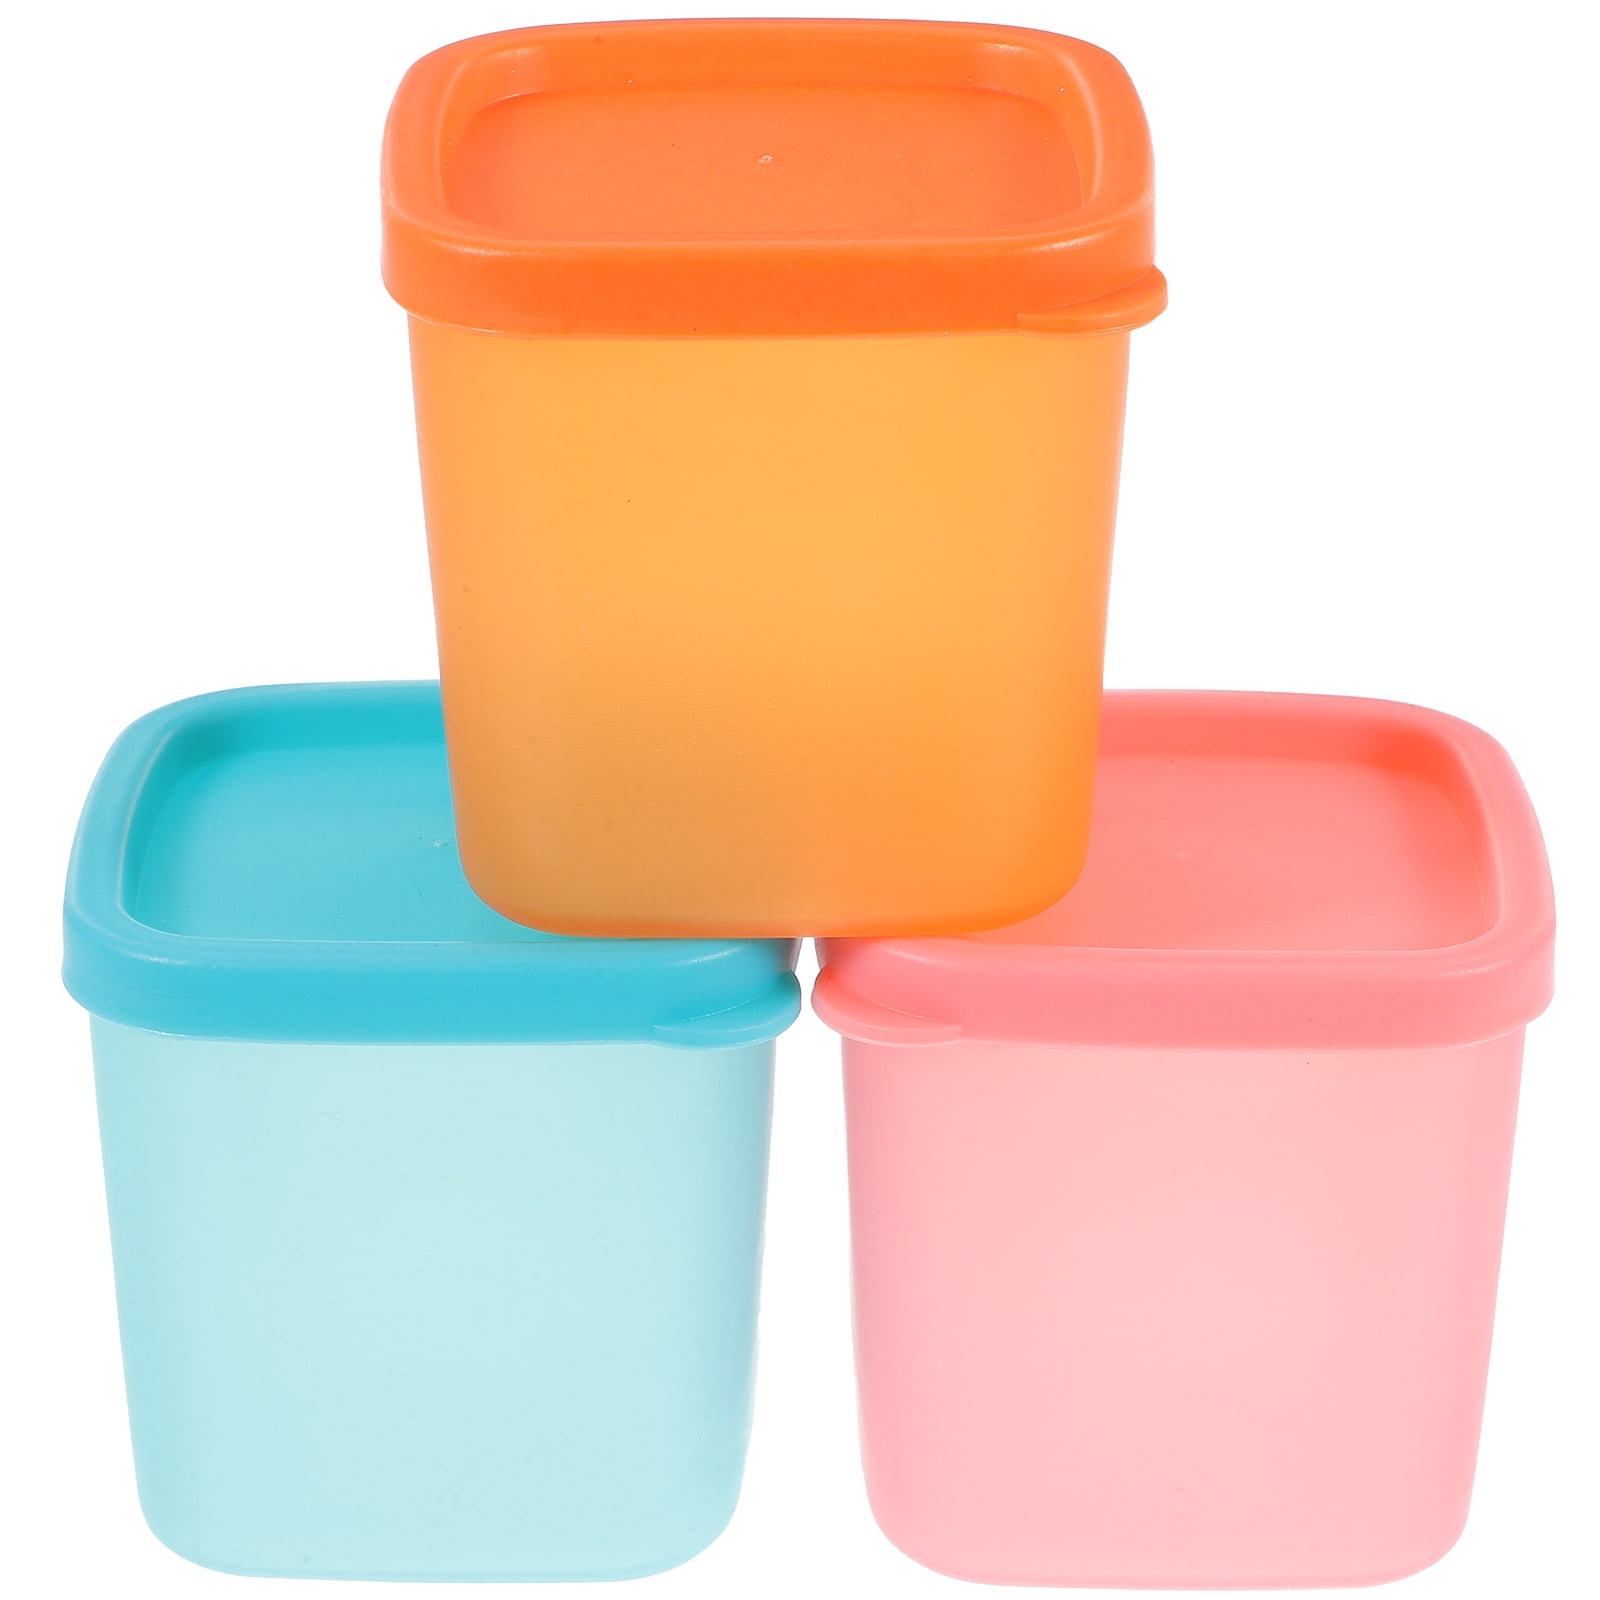 1pc Pink Ice Cream Container - Freezer Storage Container, Reusable